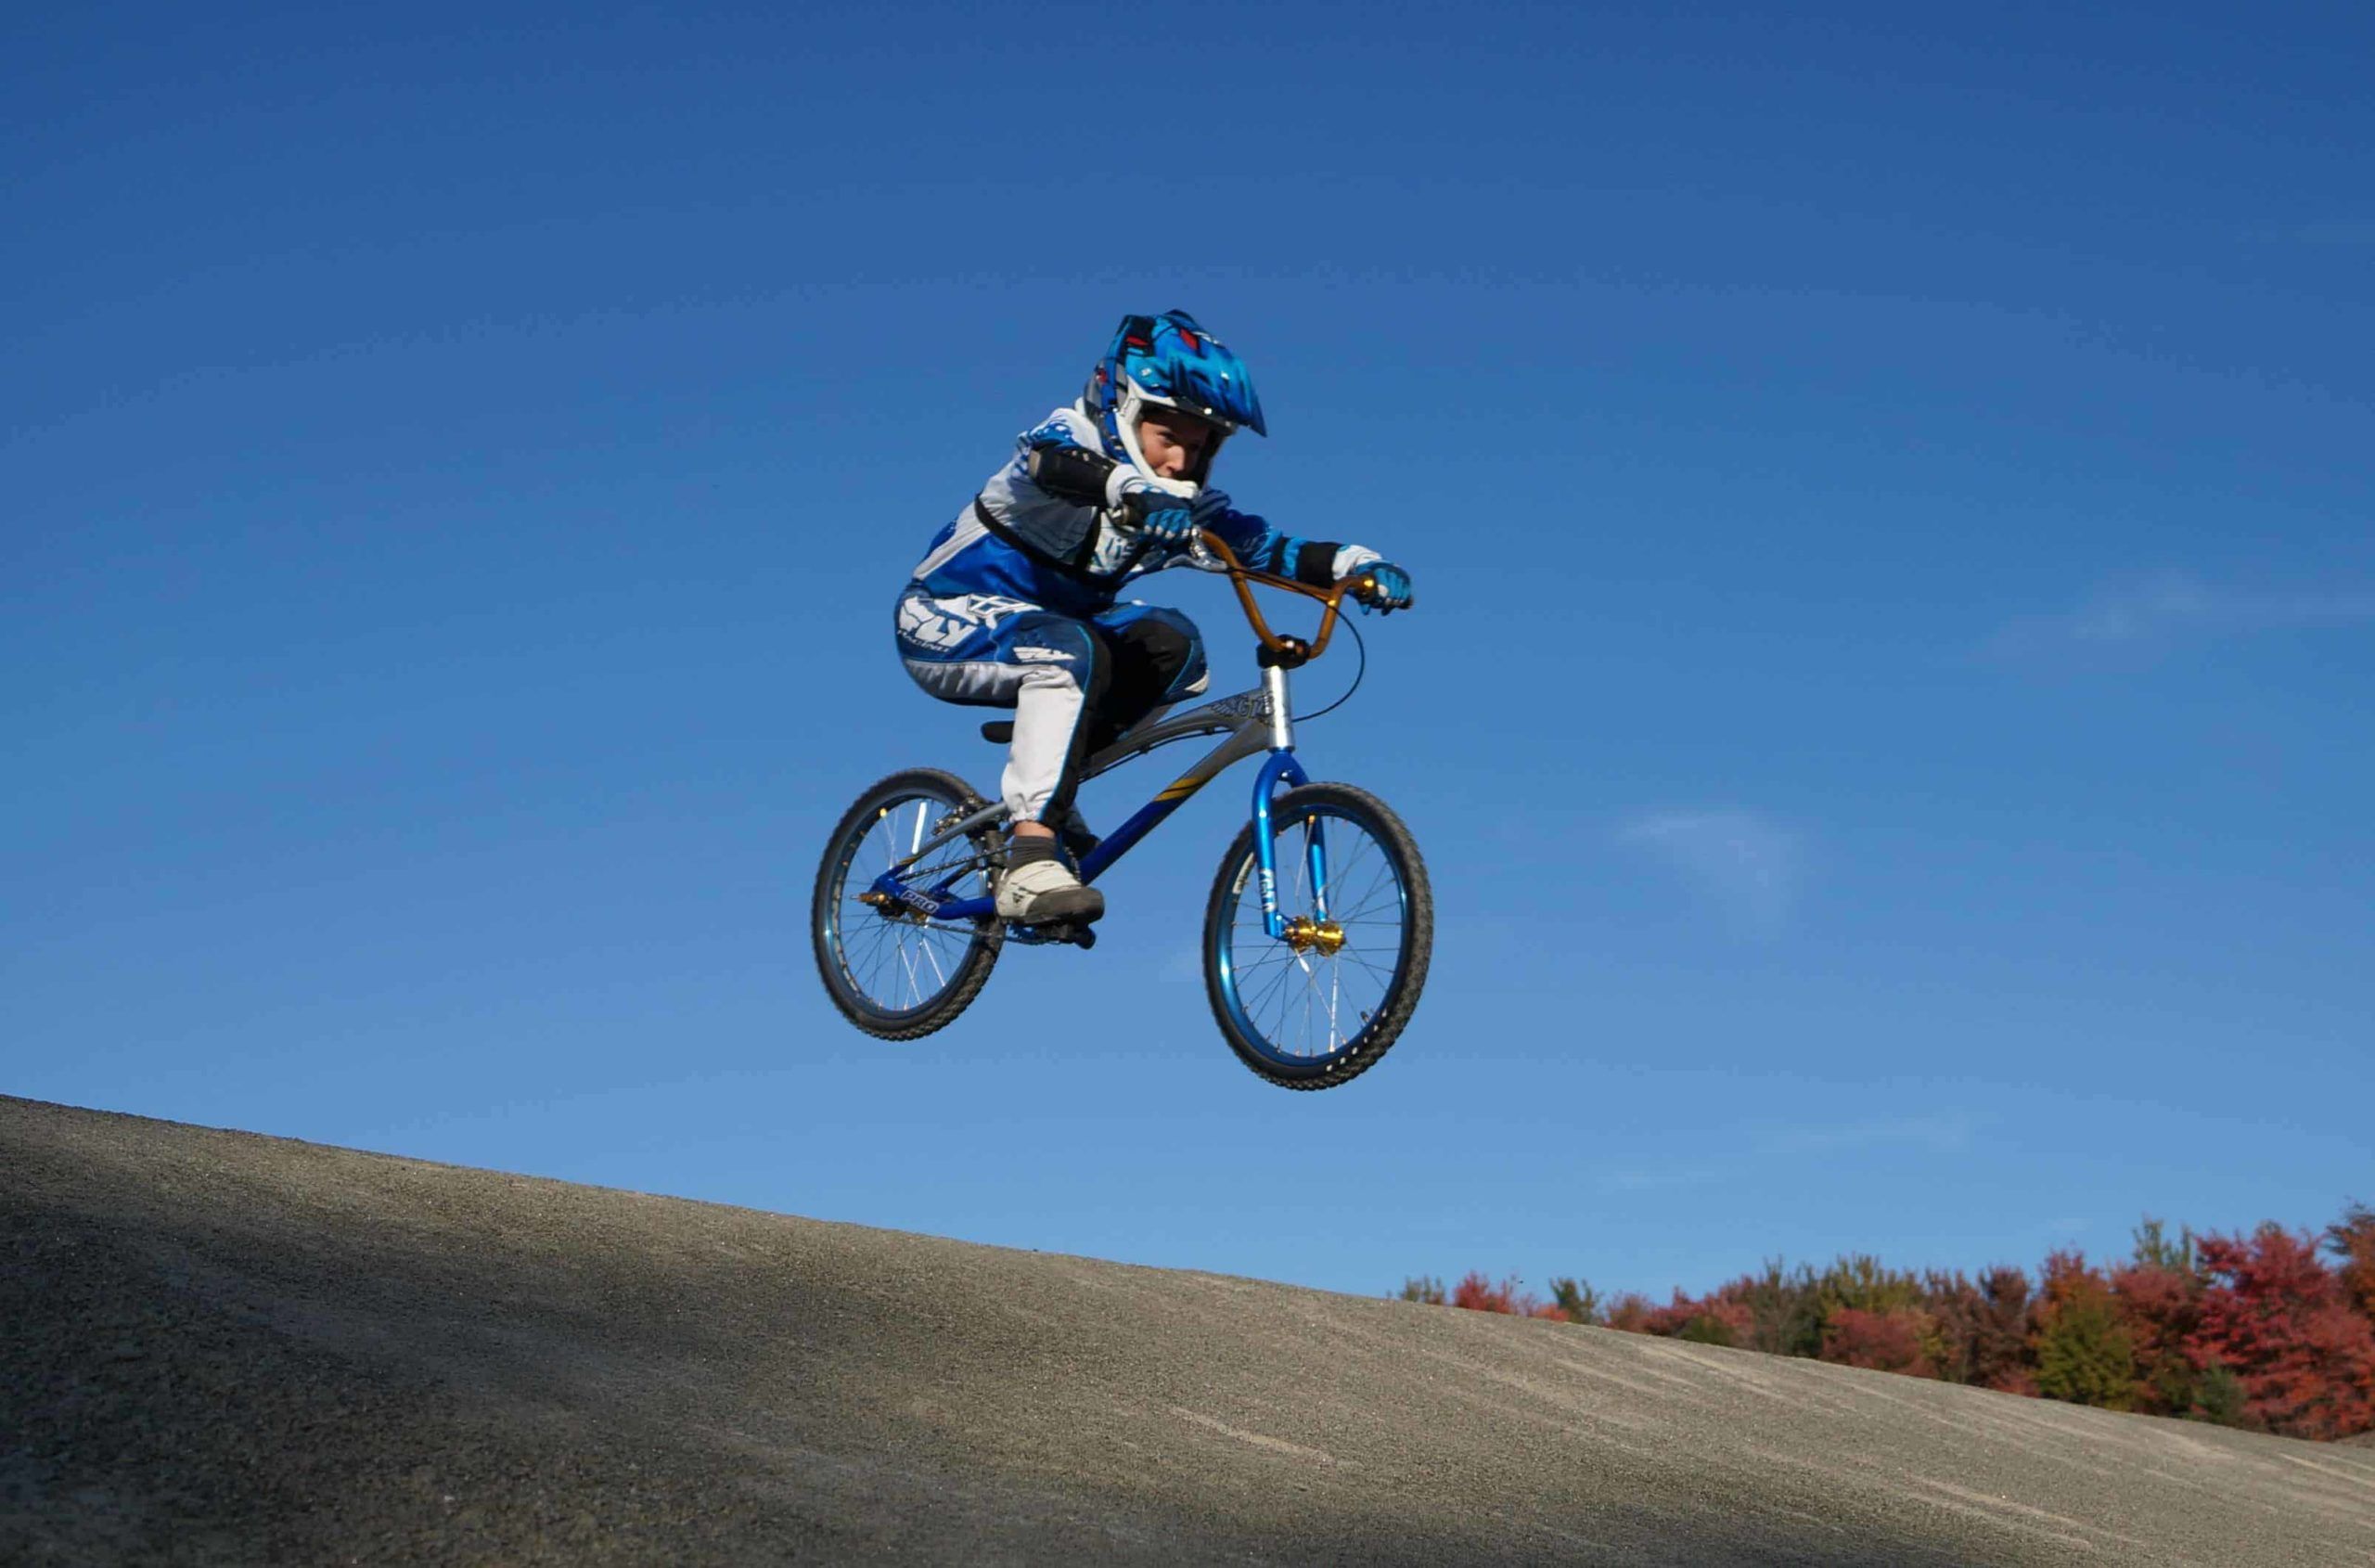 kid on BMX bike in air